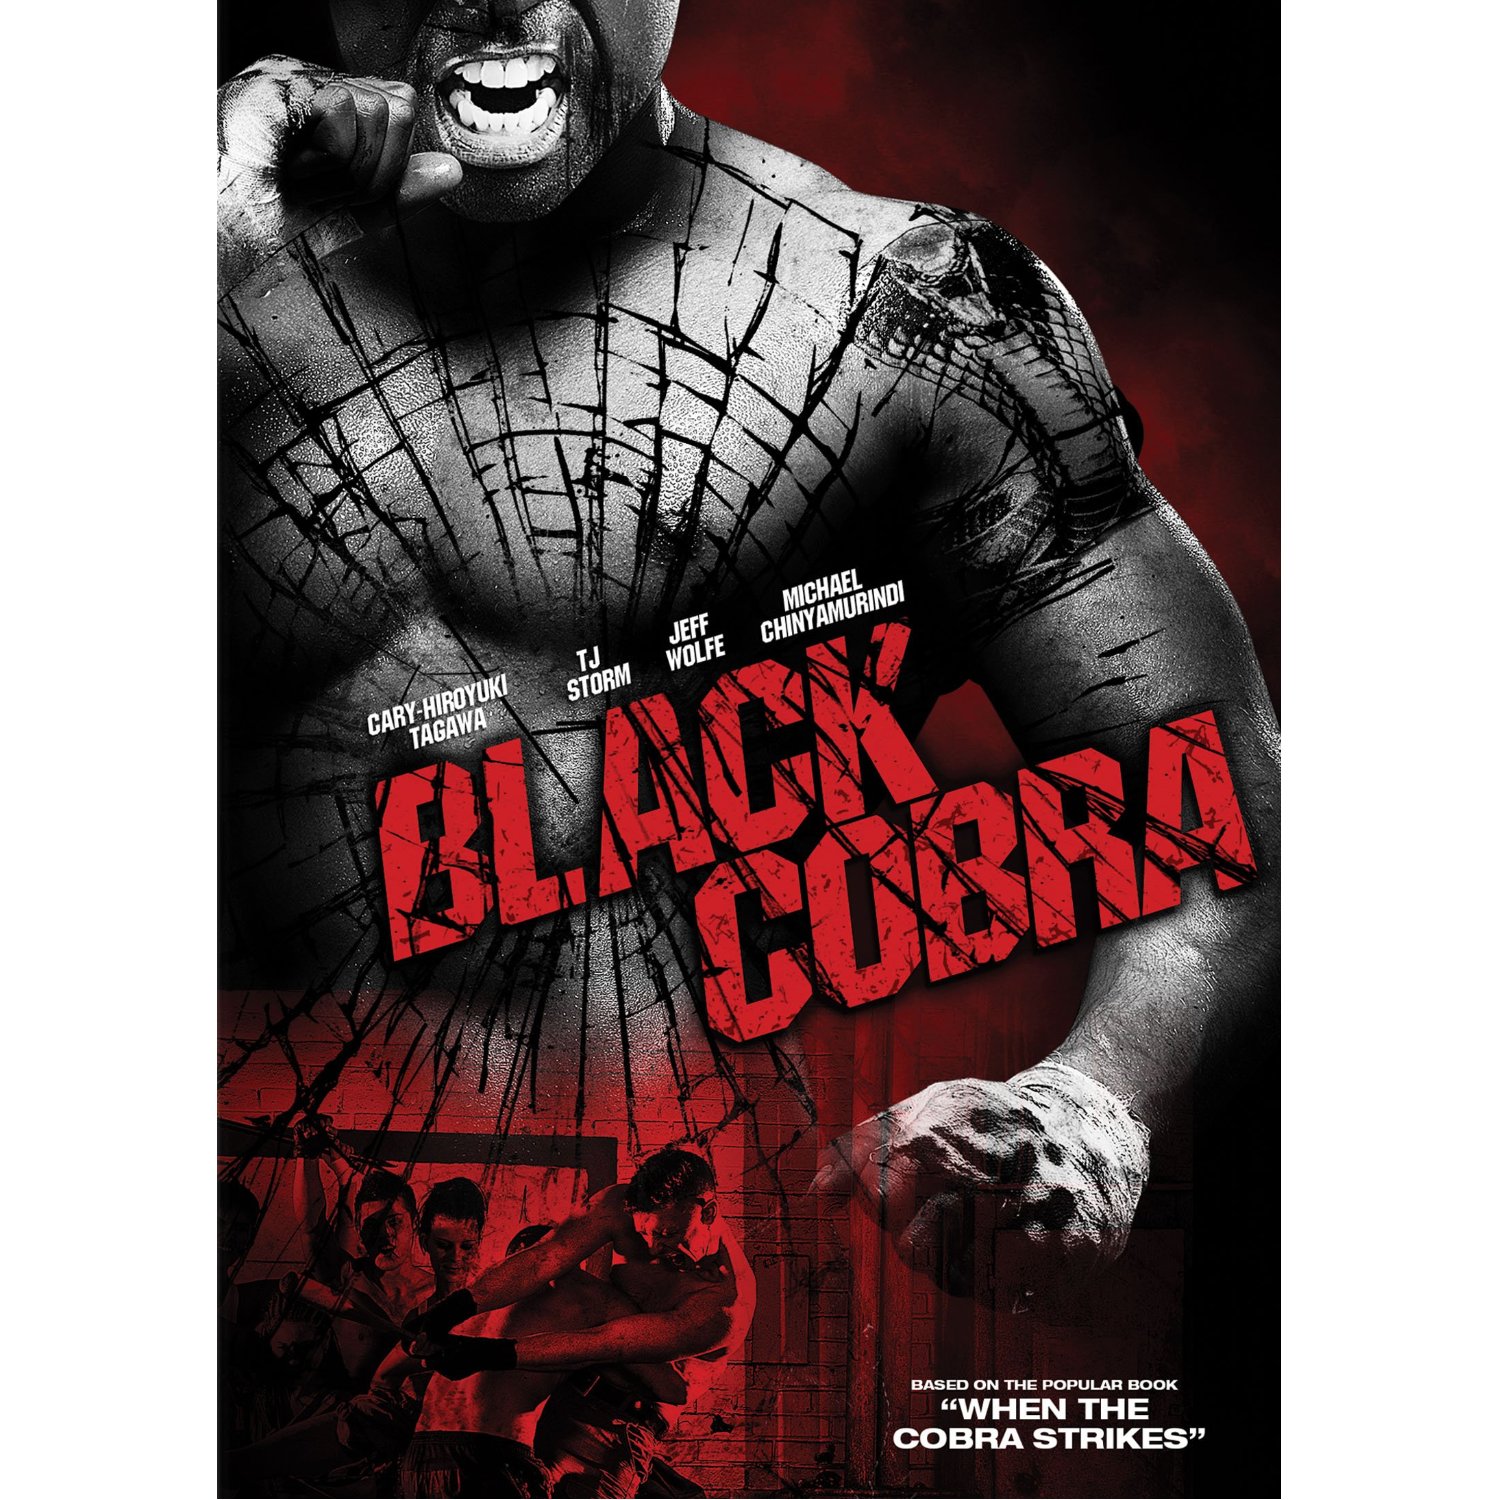 Black Cobra movie